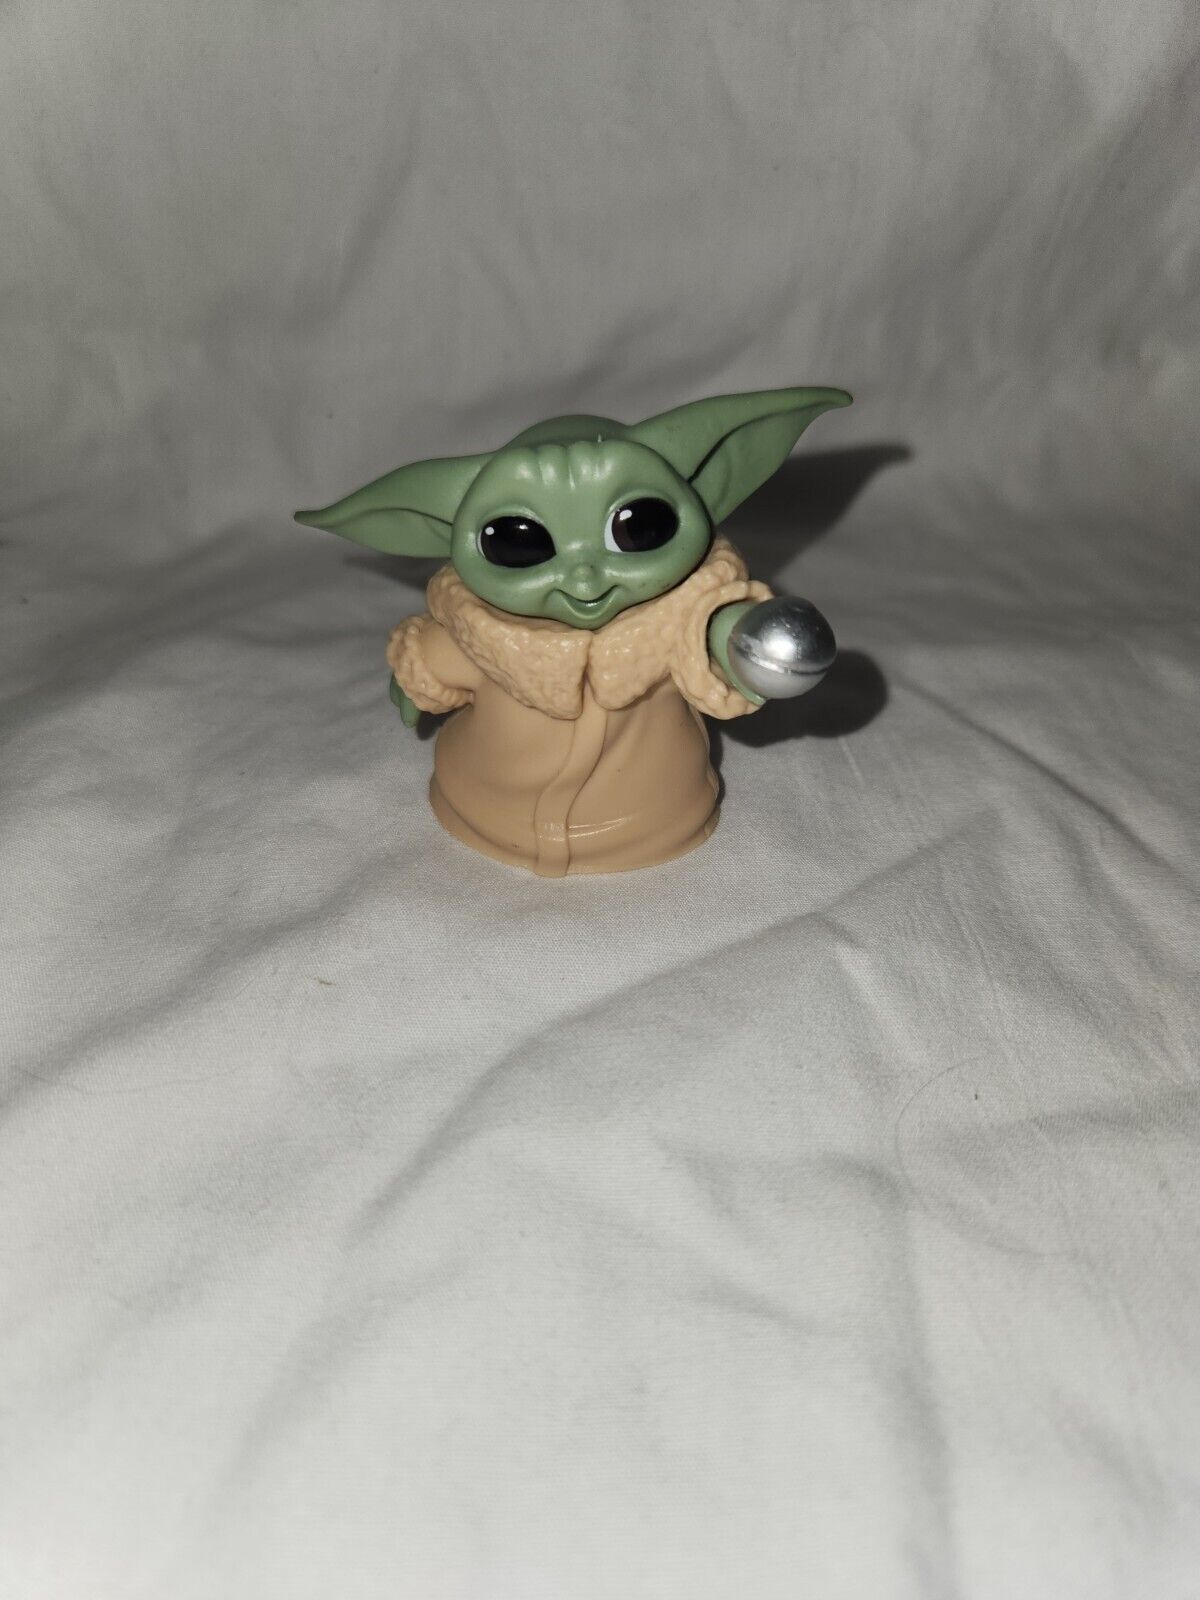 Baby Yoda Small  Figurine Plastic Star Wars Toy Mandolorian Child Grogu Ball